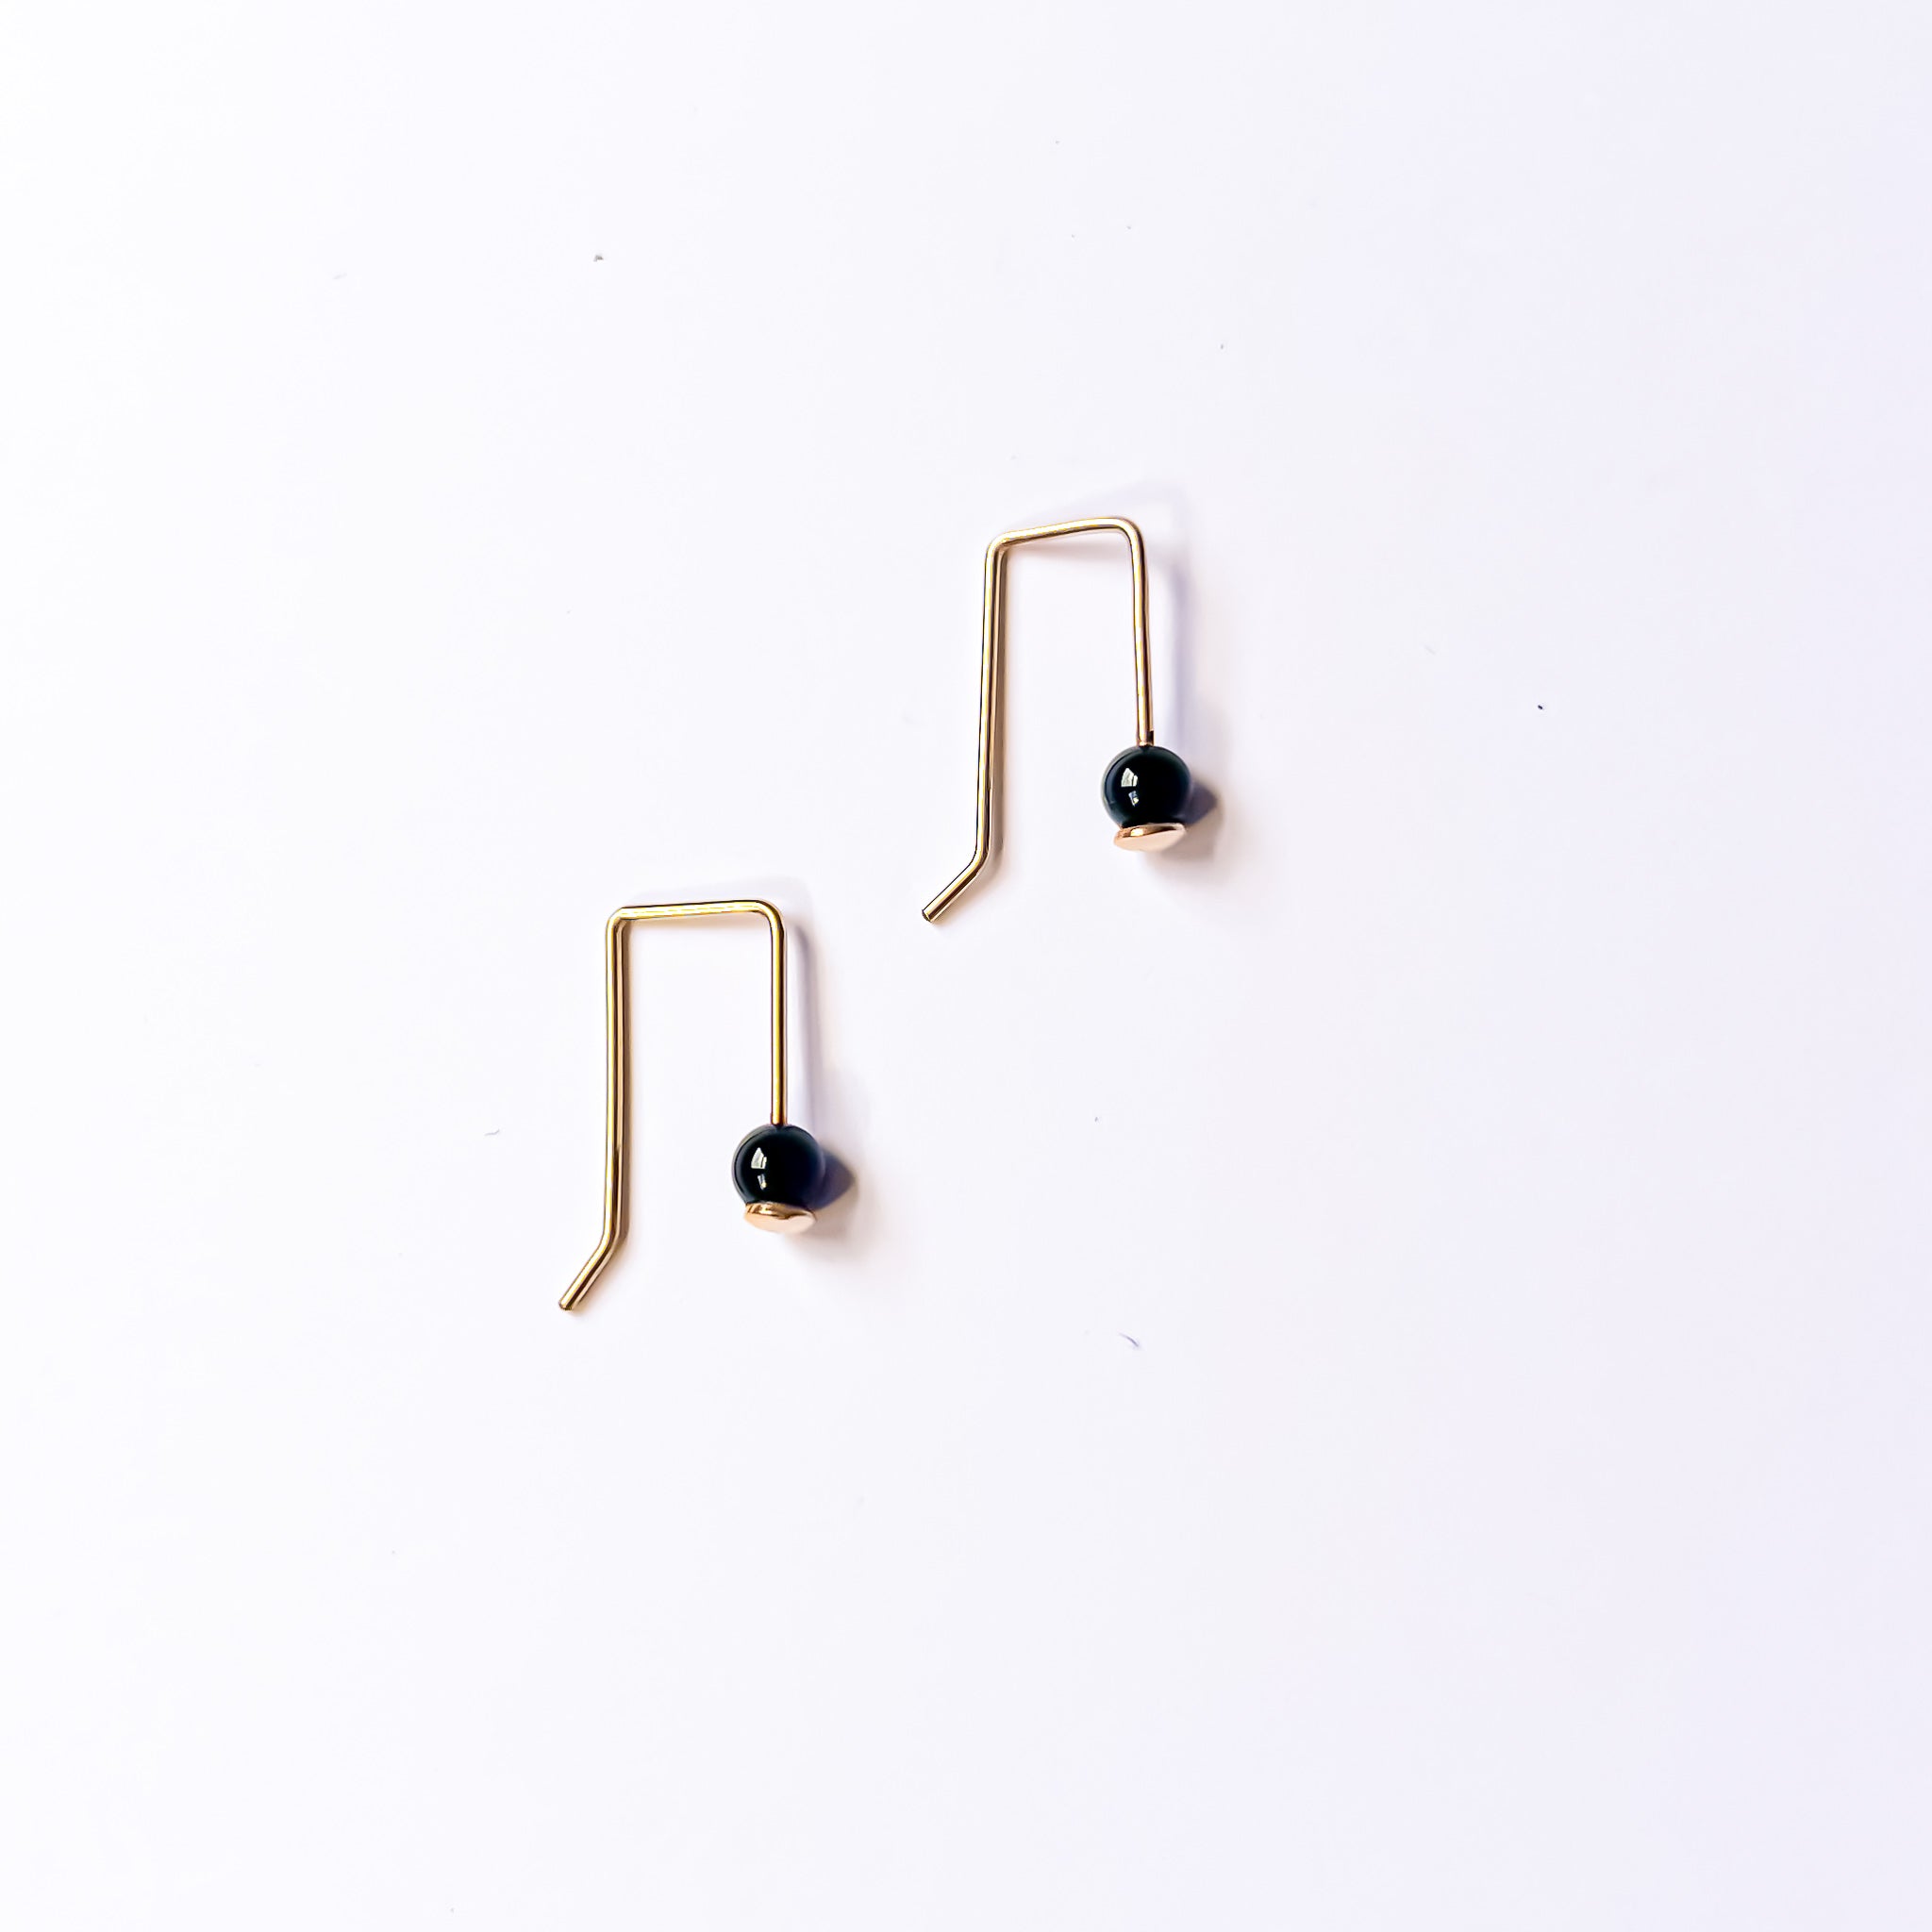 Balance x Mini Earrings Gold